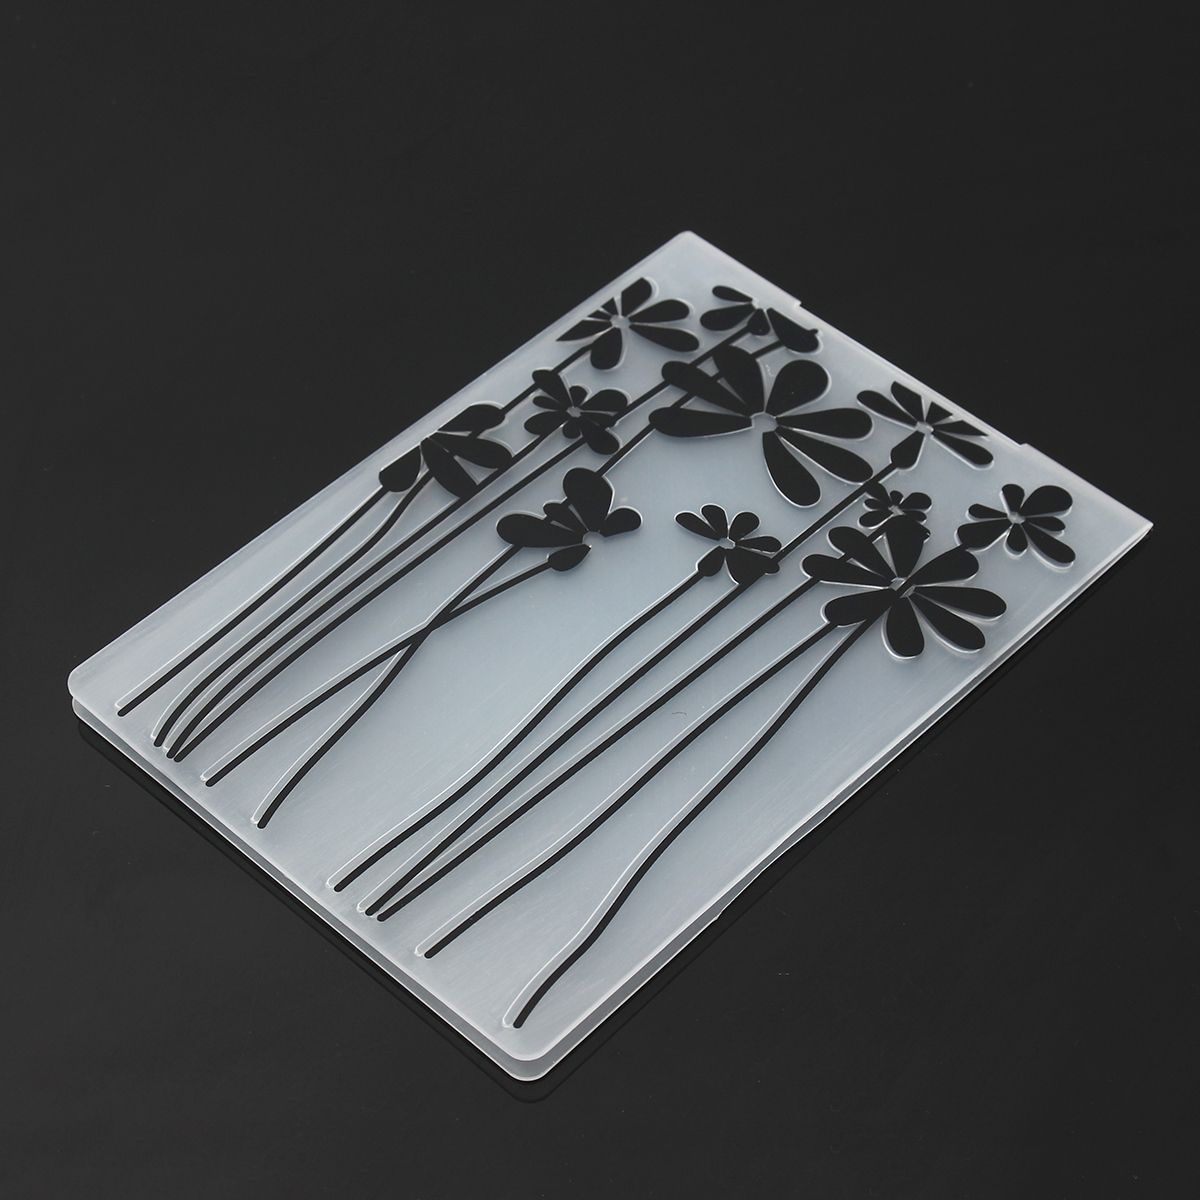 Plastic-Embossing-Folder-Flower-DIY-Scrapbooking-Photo-Album-Card-Cutting-Dies-Template-Craft-1147909